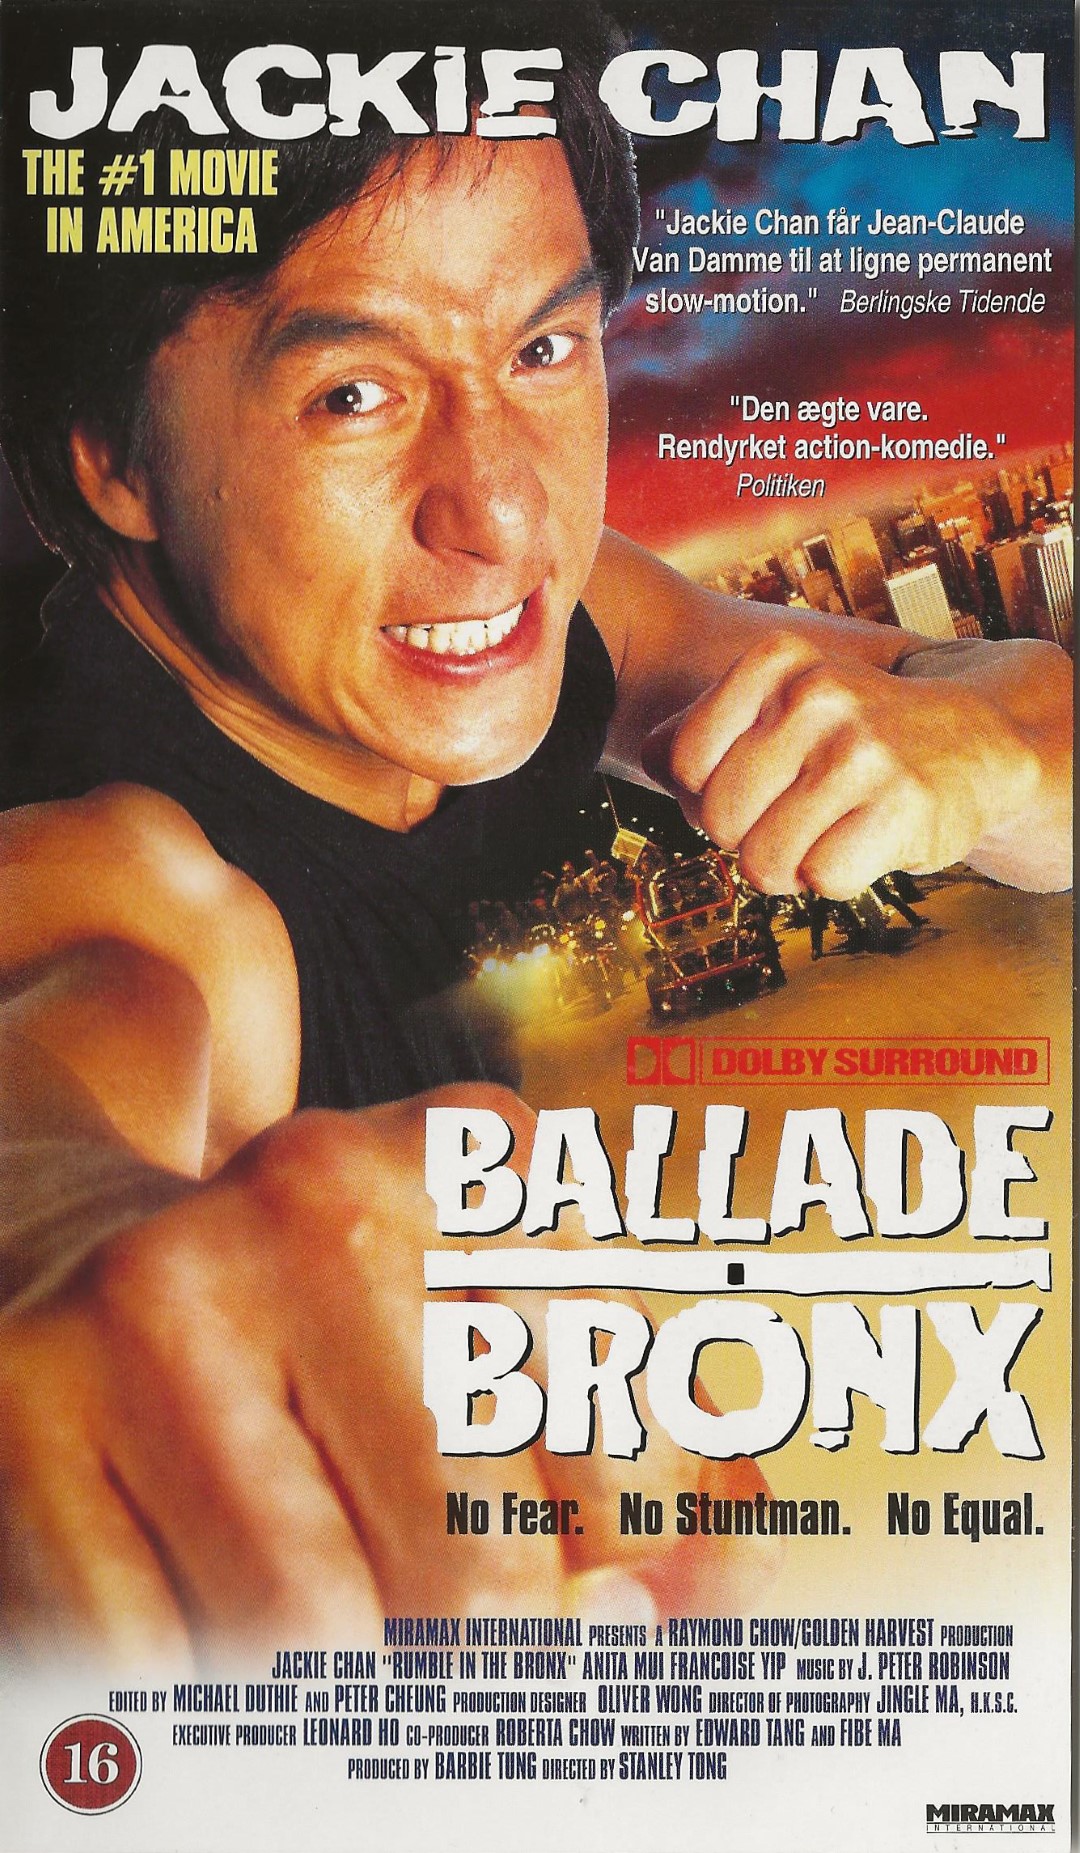 Ballade i Bronx <p>Org.titel: Rumble in the Bronx</p> VHS Scanbox 1996